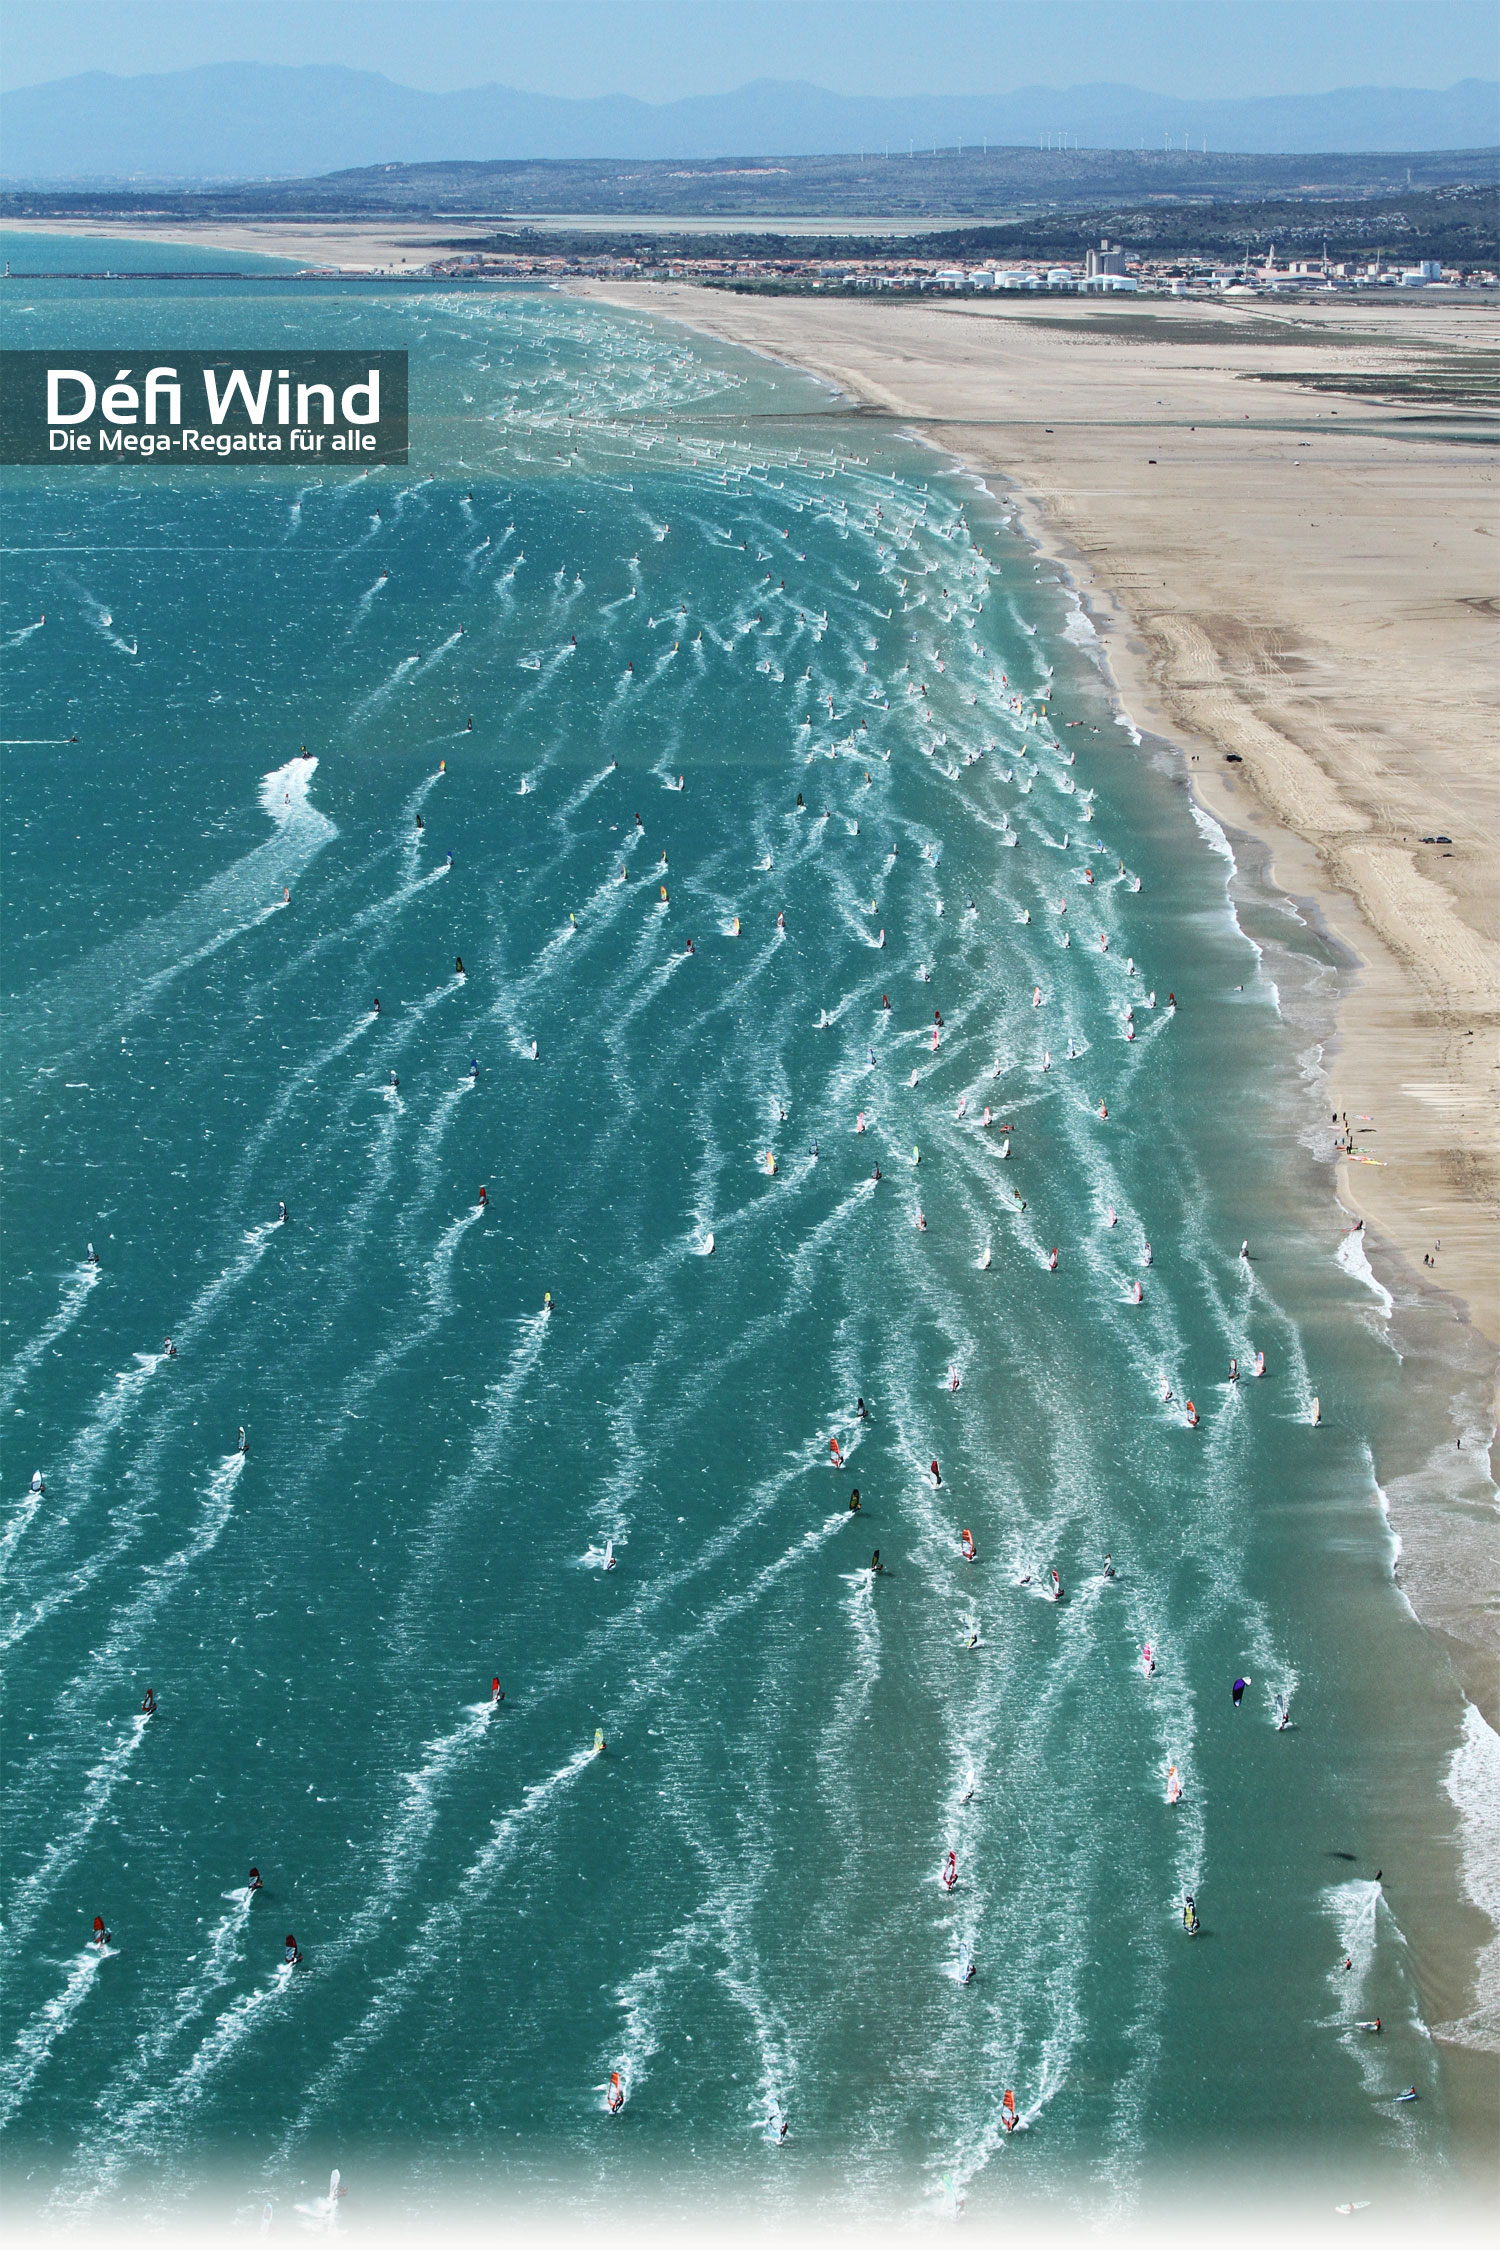 Dfi Wind 2015